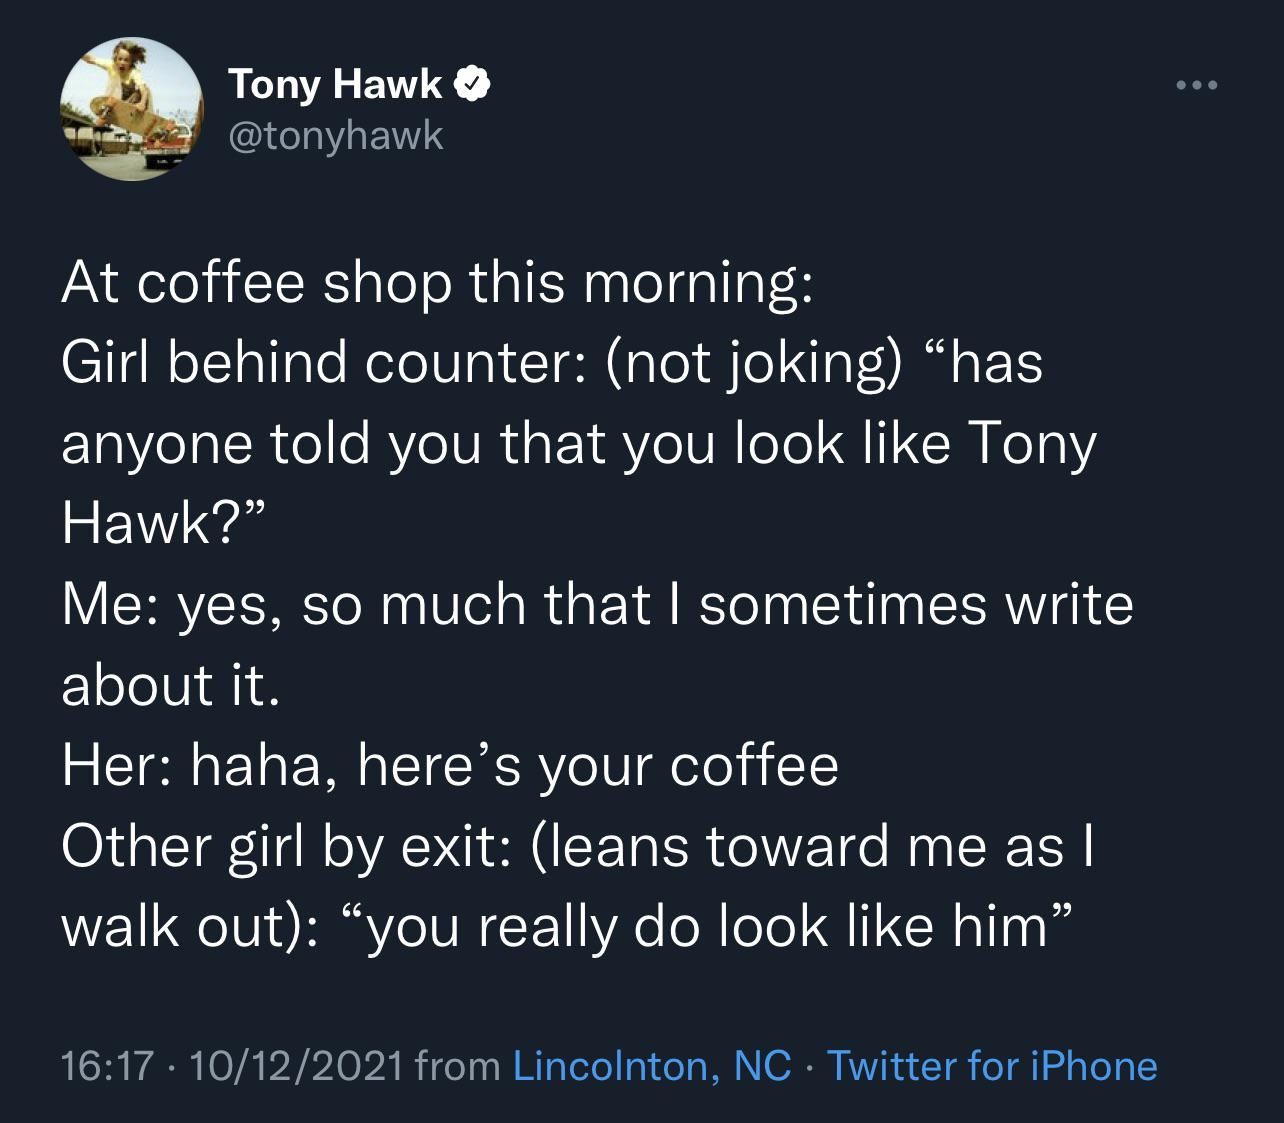 Tony Hawk gets told he looks like Tony Hawk